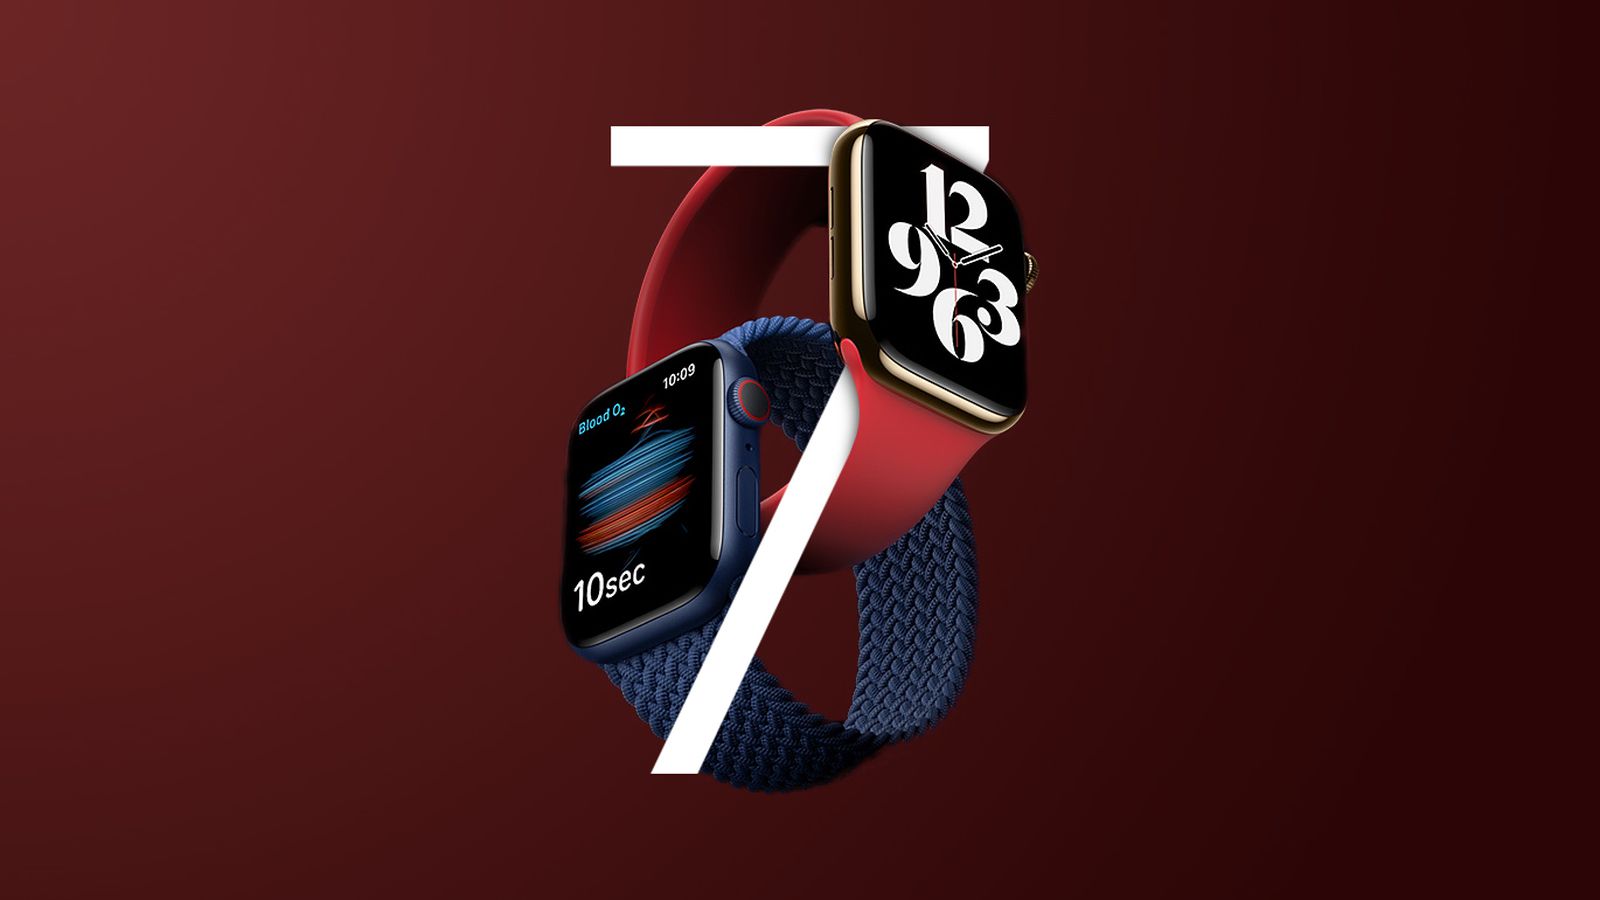 Review: Apple Watch Series 7, um upgrade incremental - MacMagazine